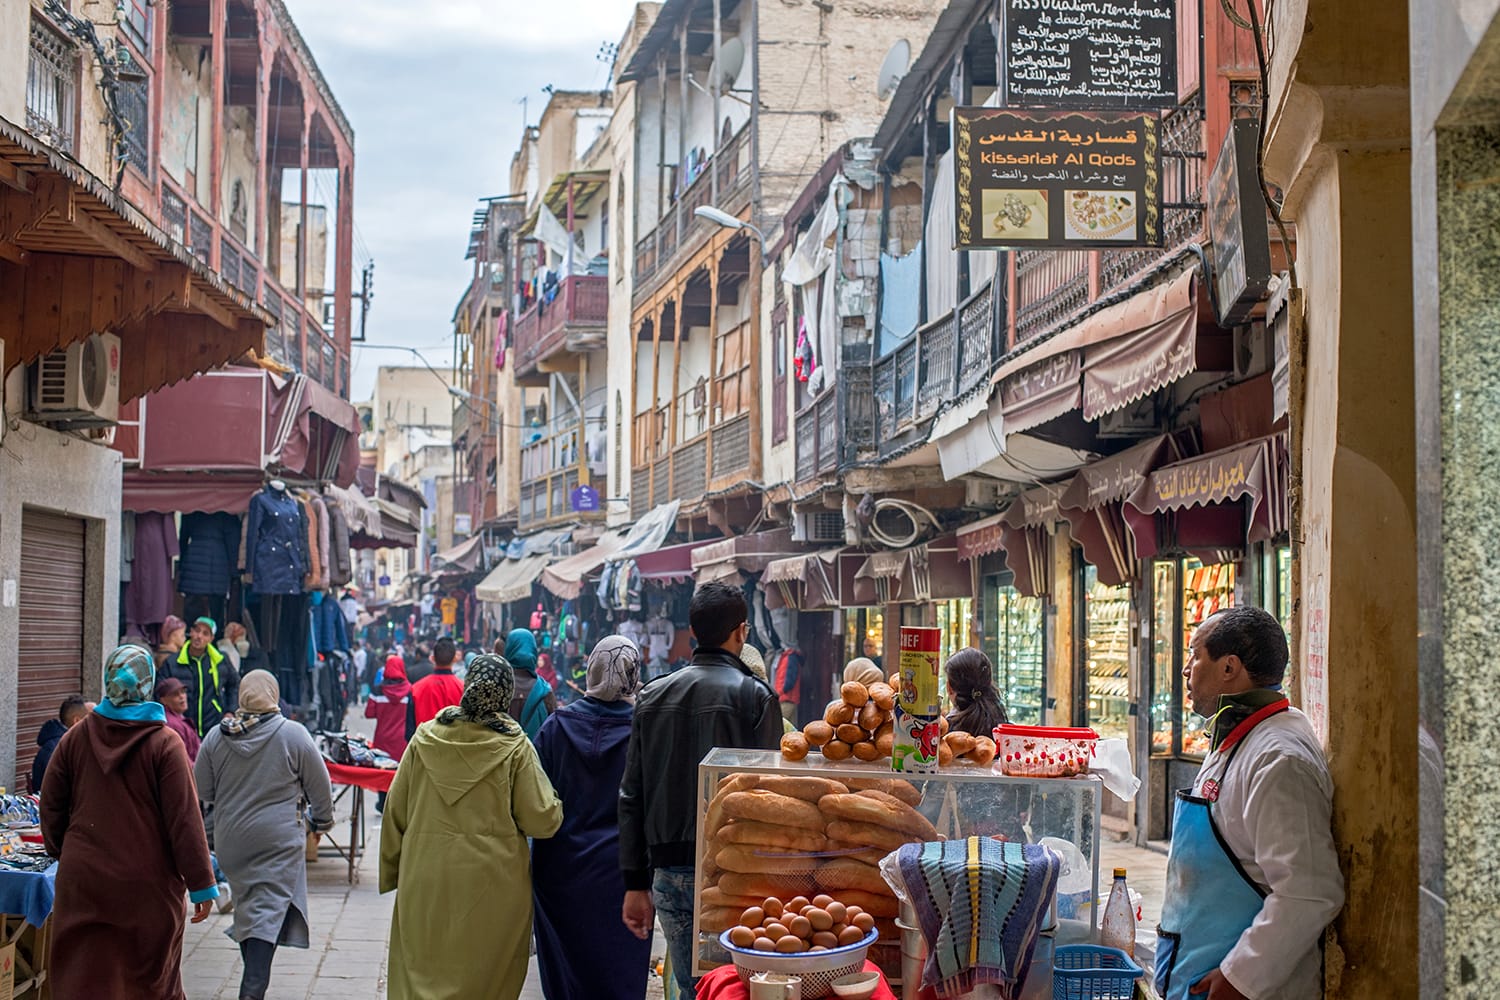 Crowds walking in Mellah, Fez, Morocco